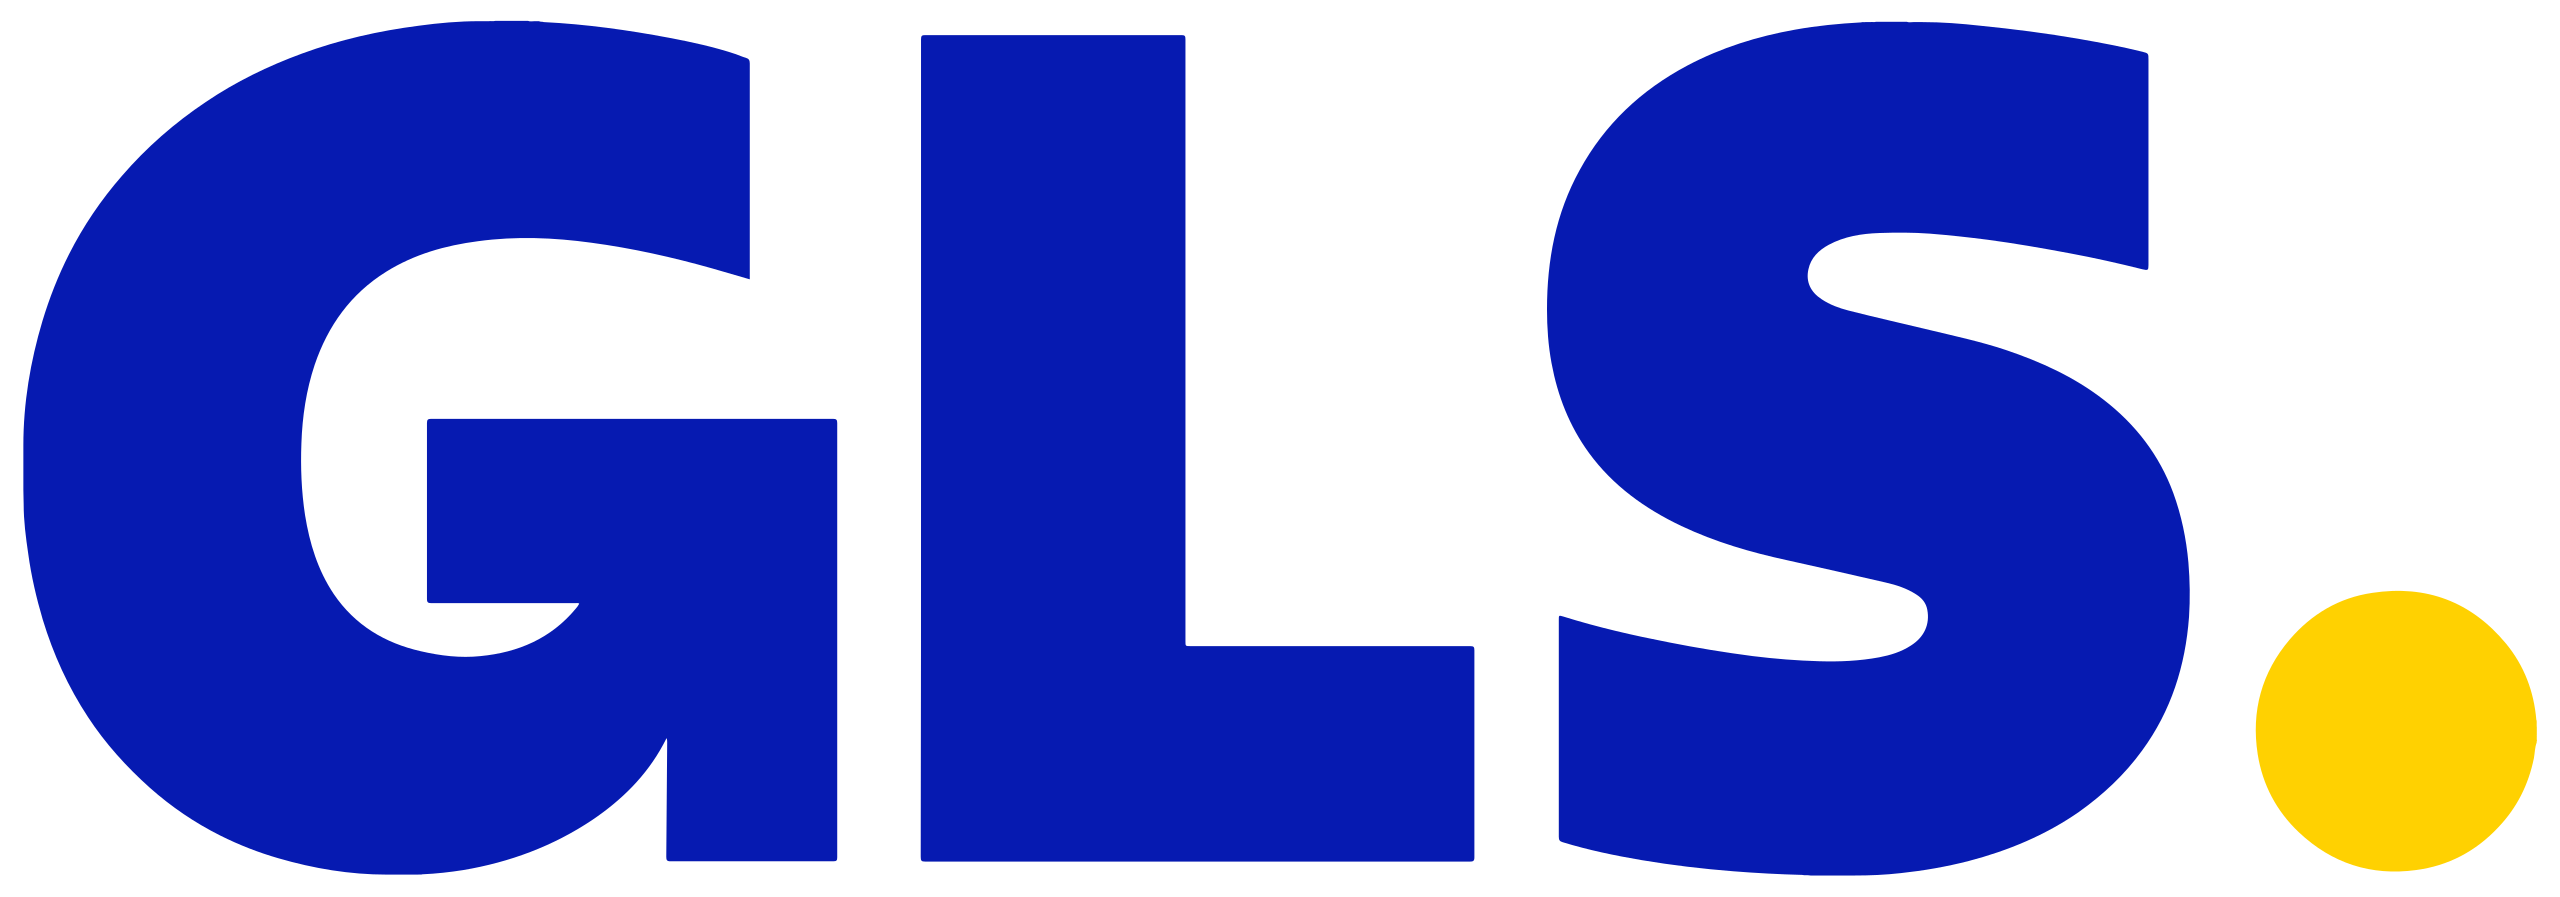 GLS csomagpont logo